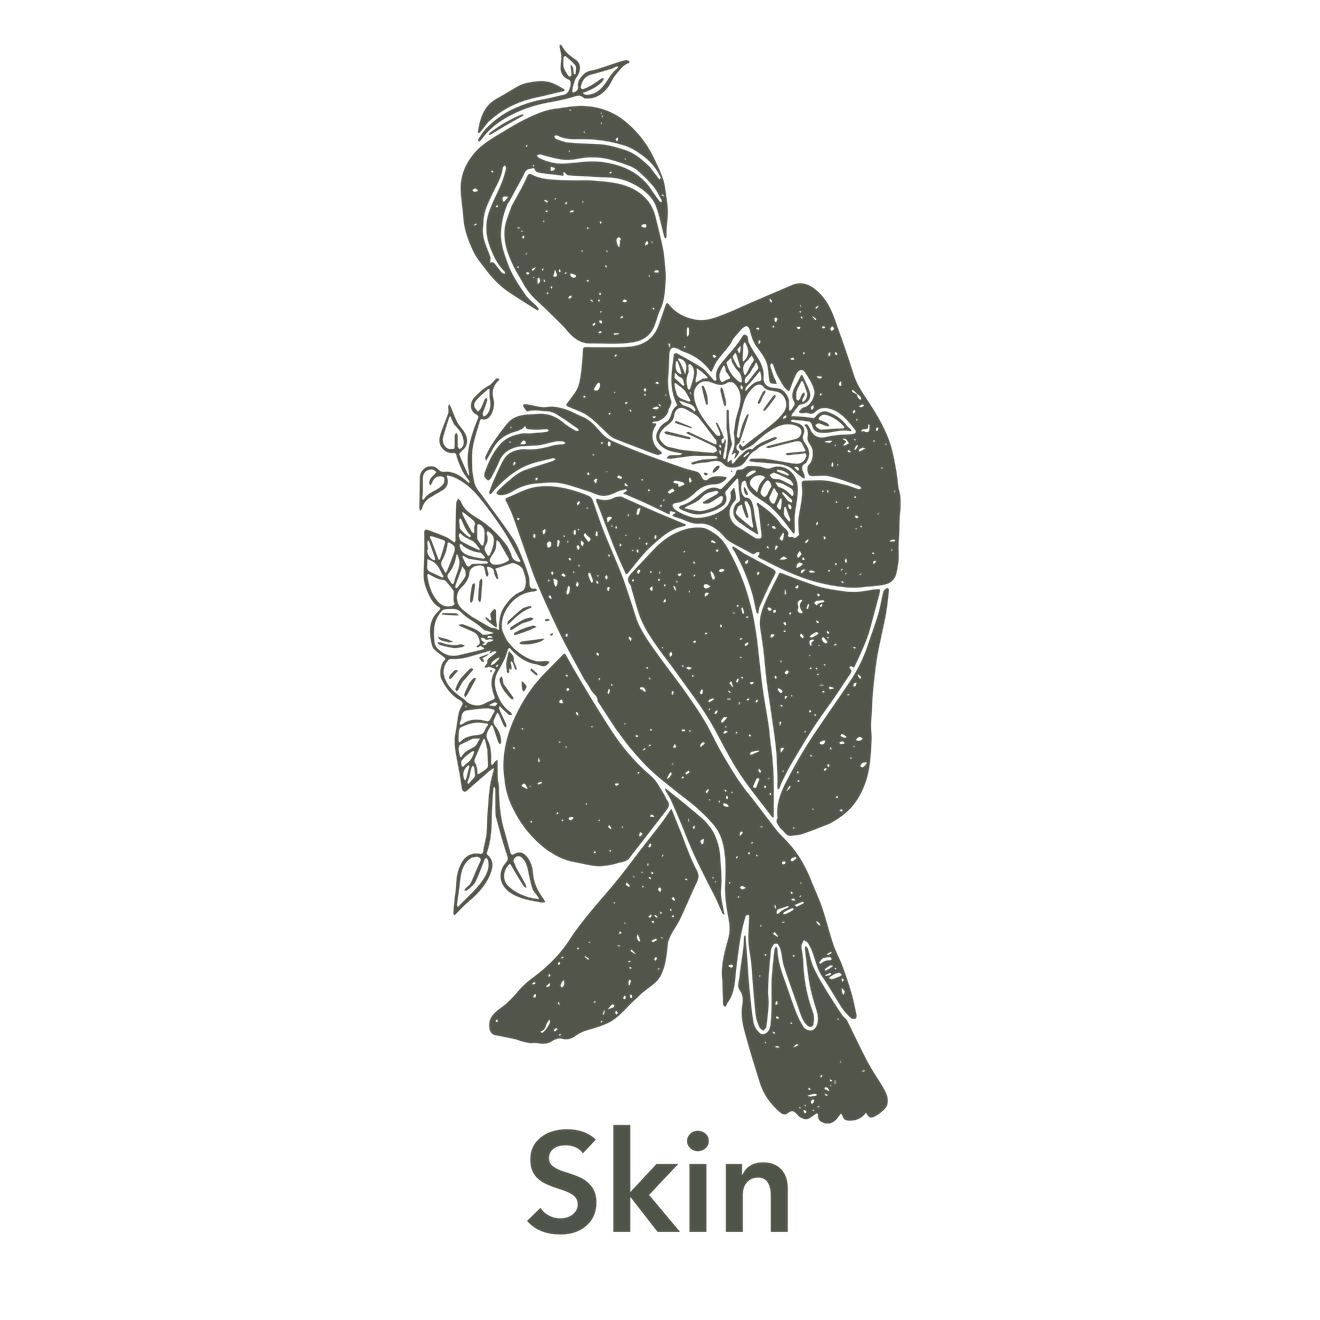 SubLuna Illustration - Skin